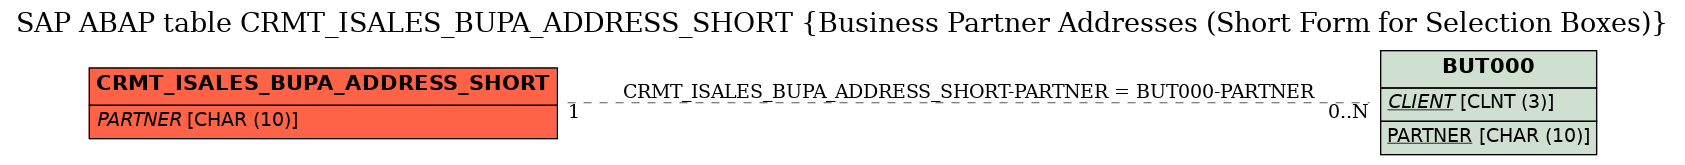 E-R Diagram for table CRMT_ISALES_BUPA_ADDRESS_SHORT (Business Partner Addresses (Short Form for Selection Boxes))